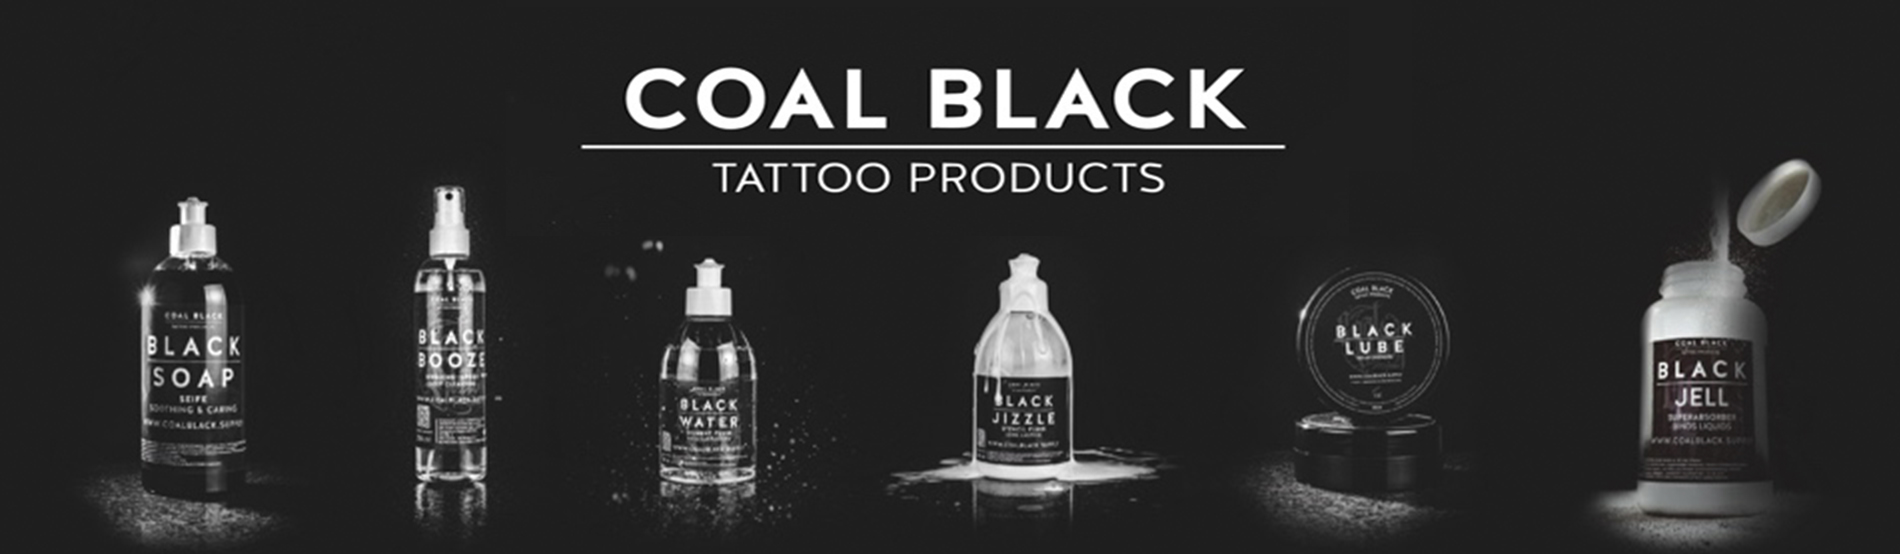 Coal Black Products